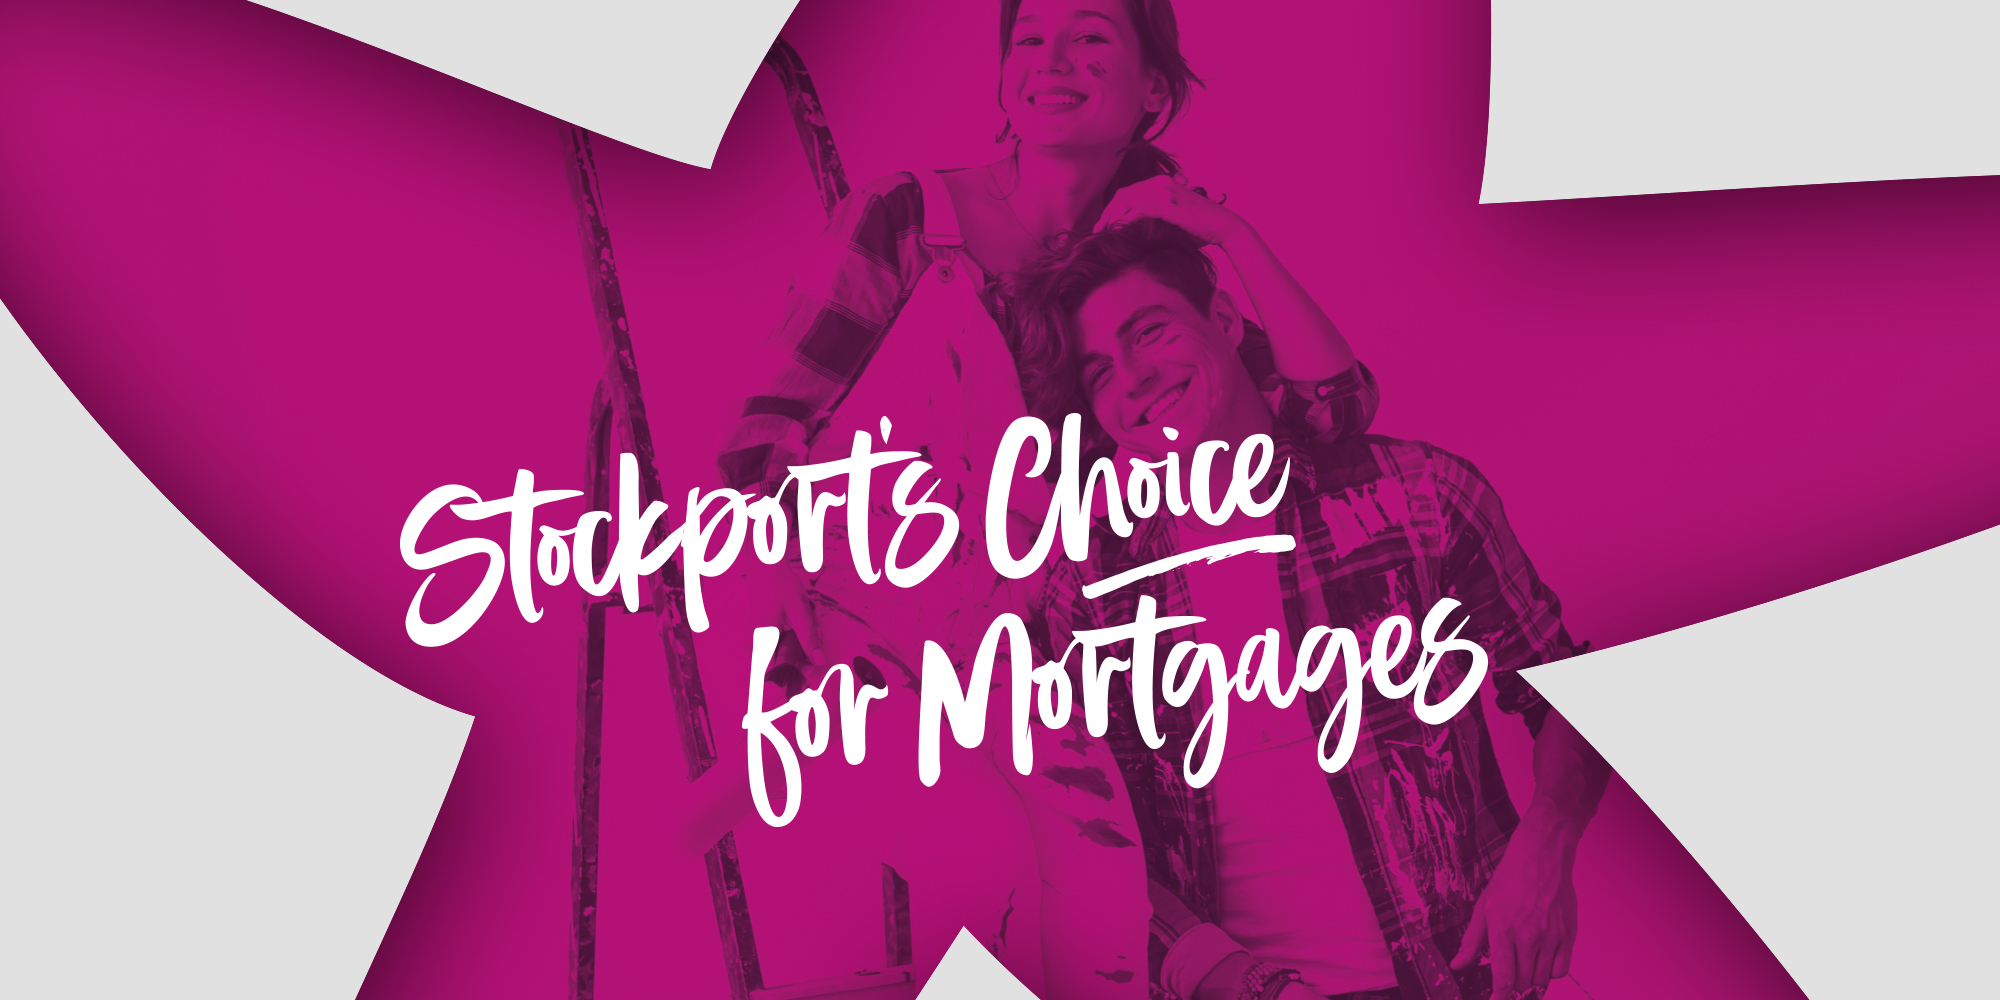 Stockport Choice-Mortgage